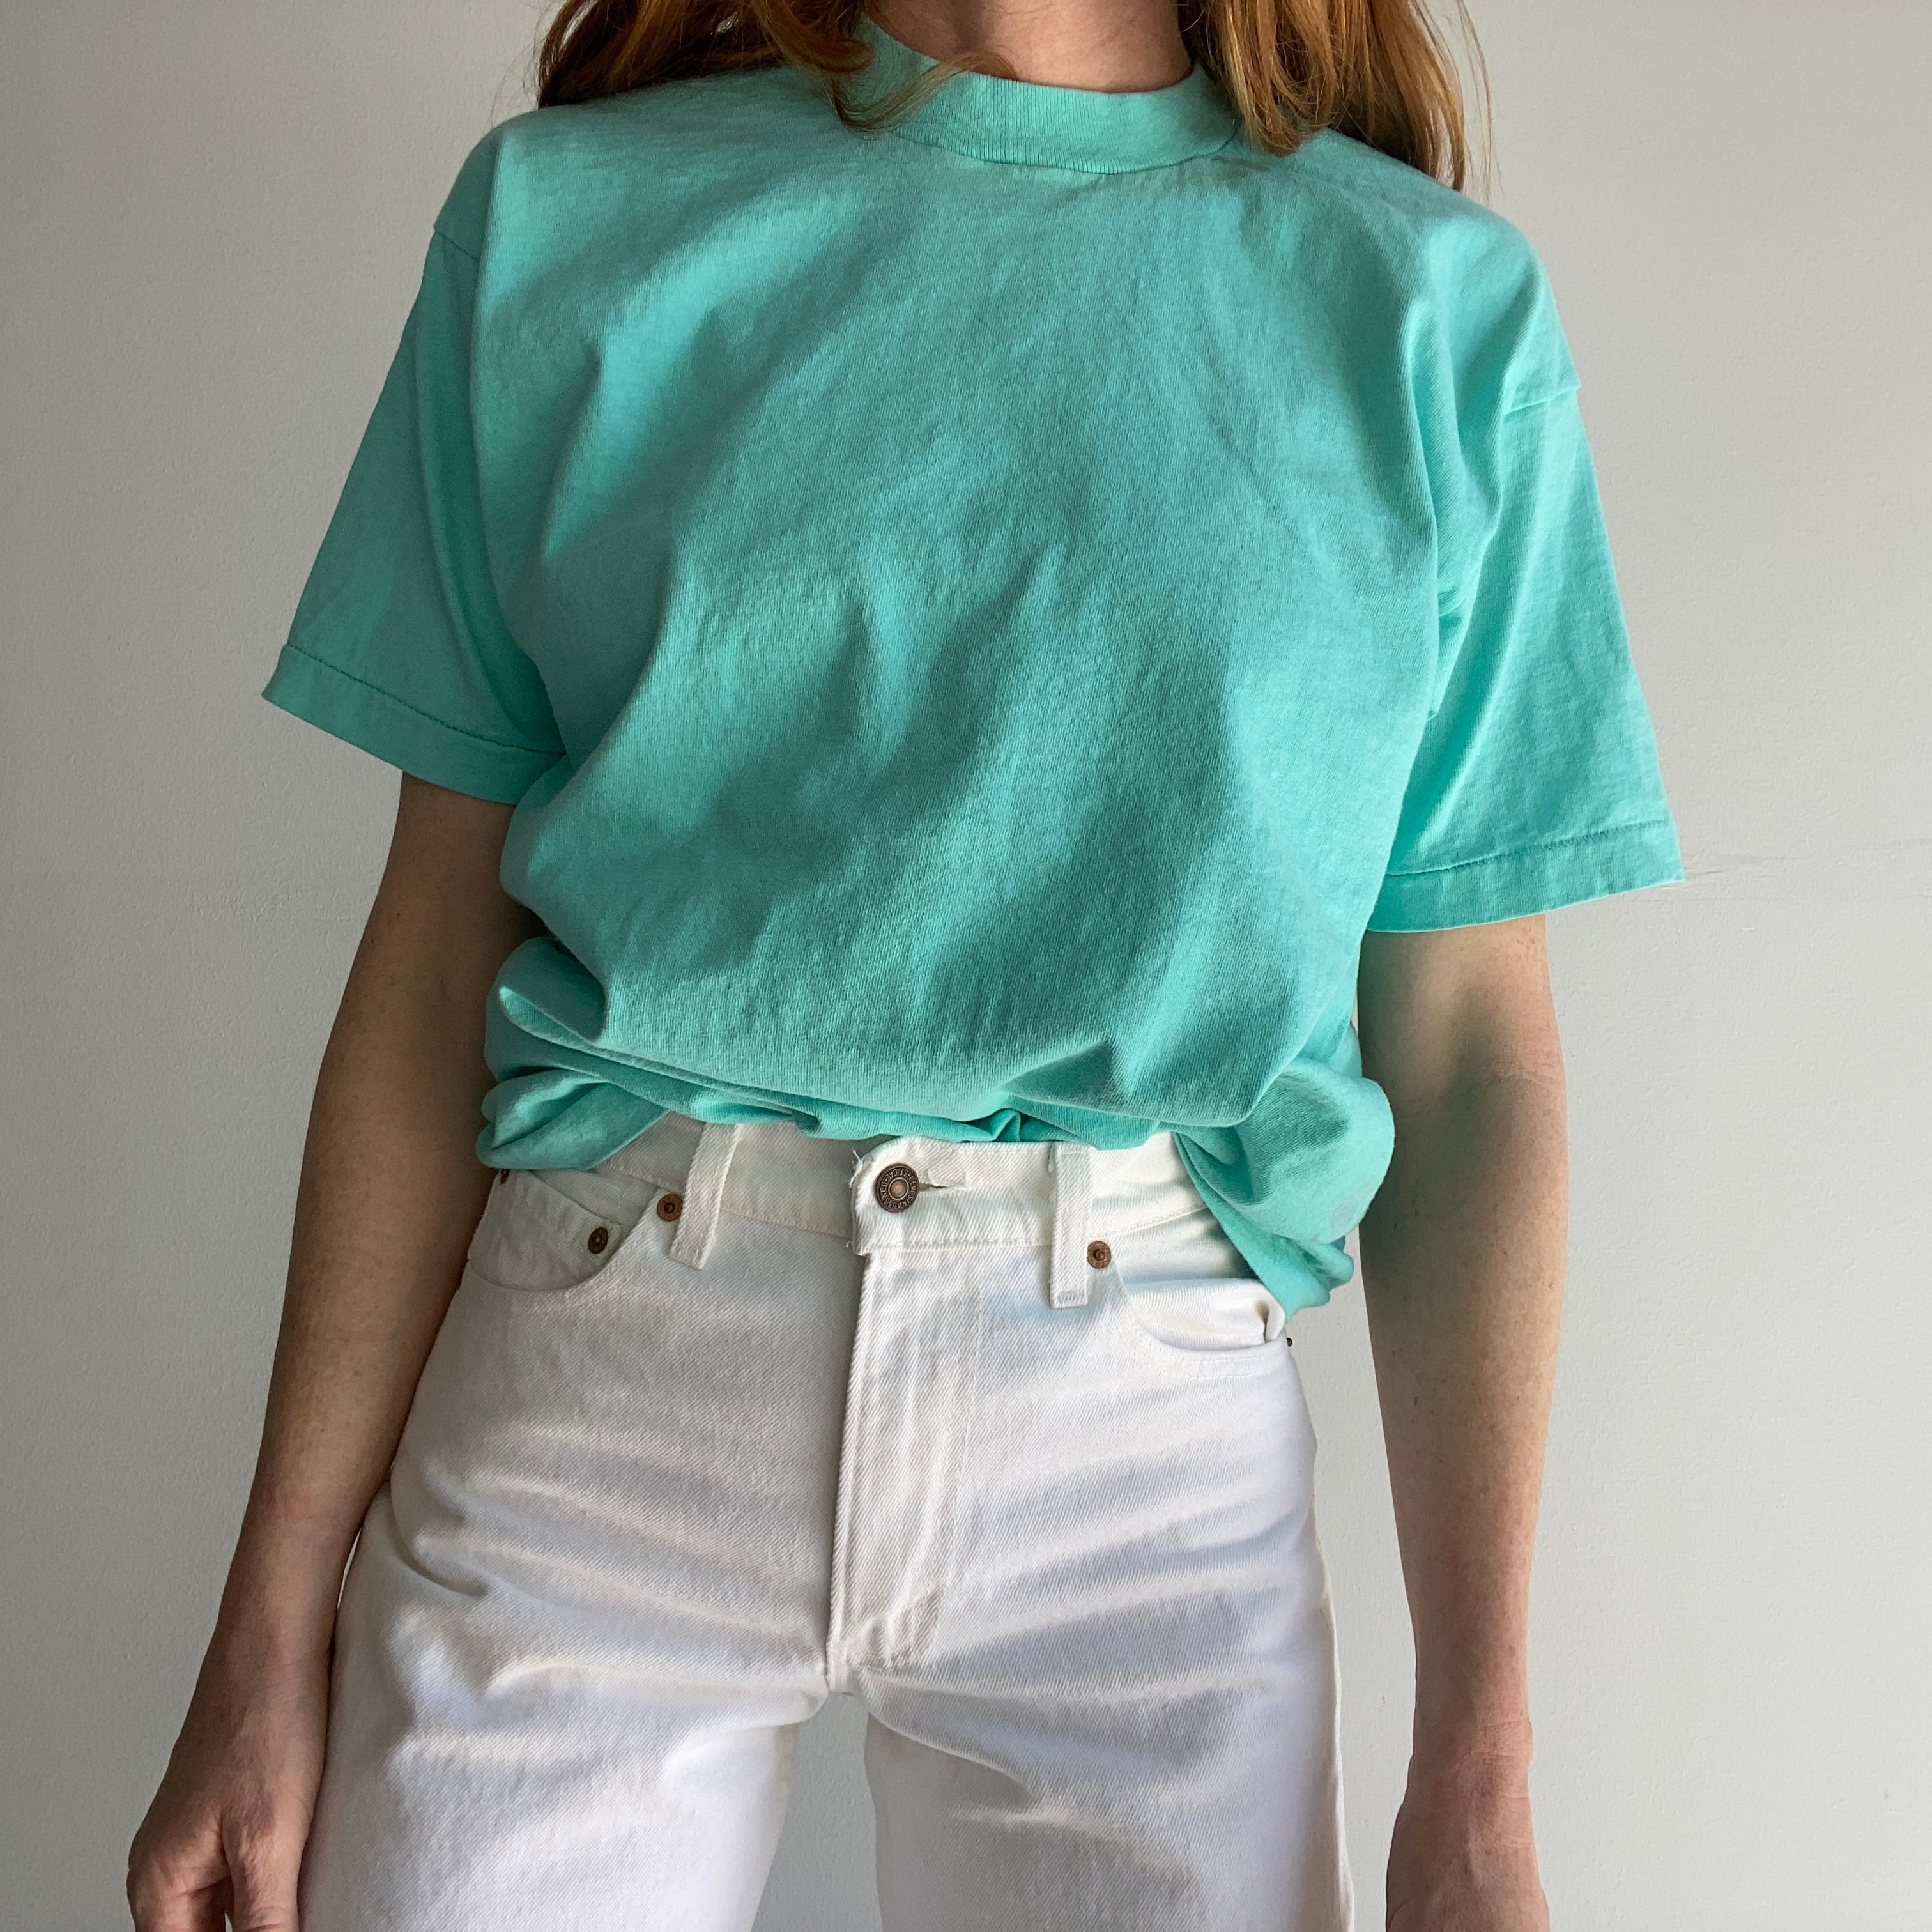 1980s Sea Foam Green Cotton FOTL T-Shirt